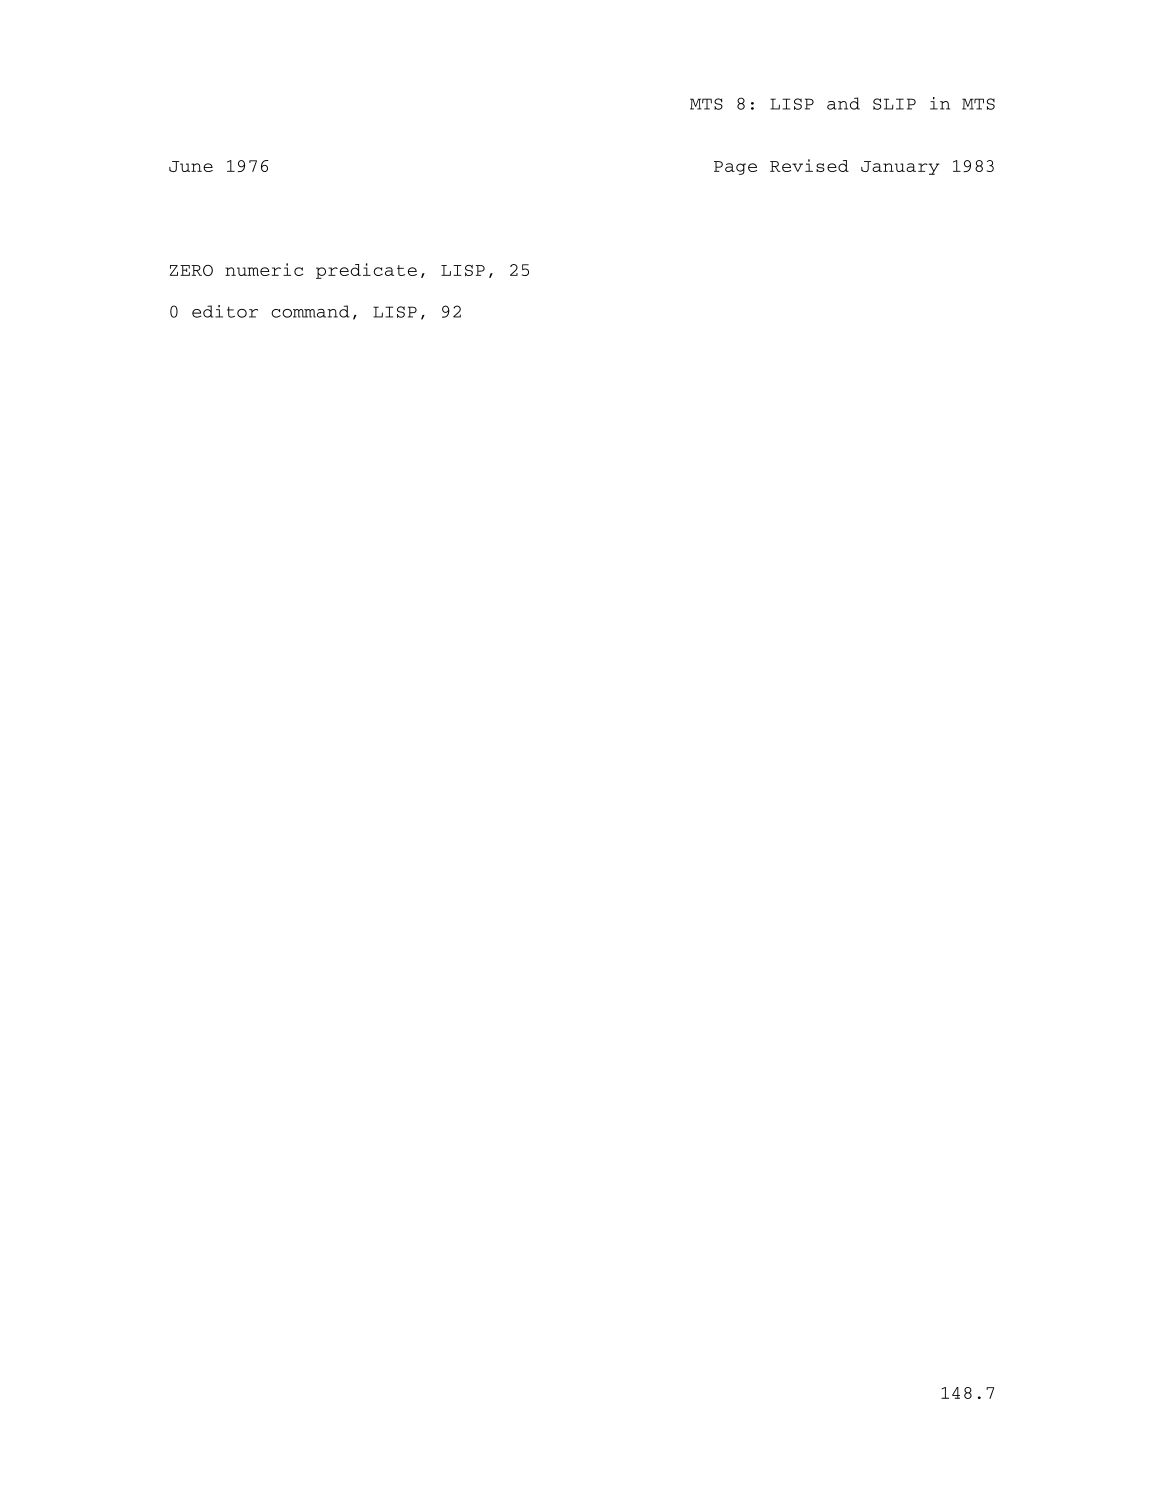 MTS Volume 8 - LISP and SLIP page 154